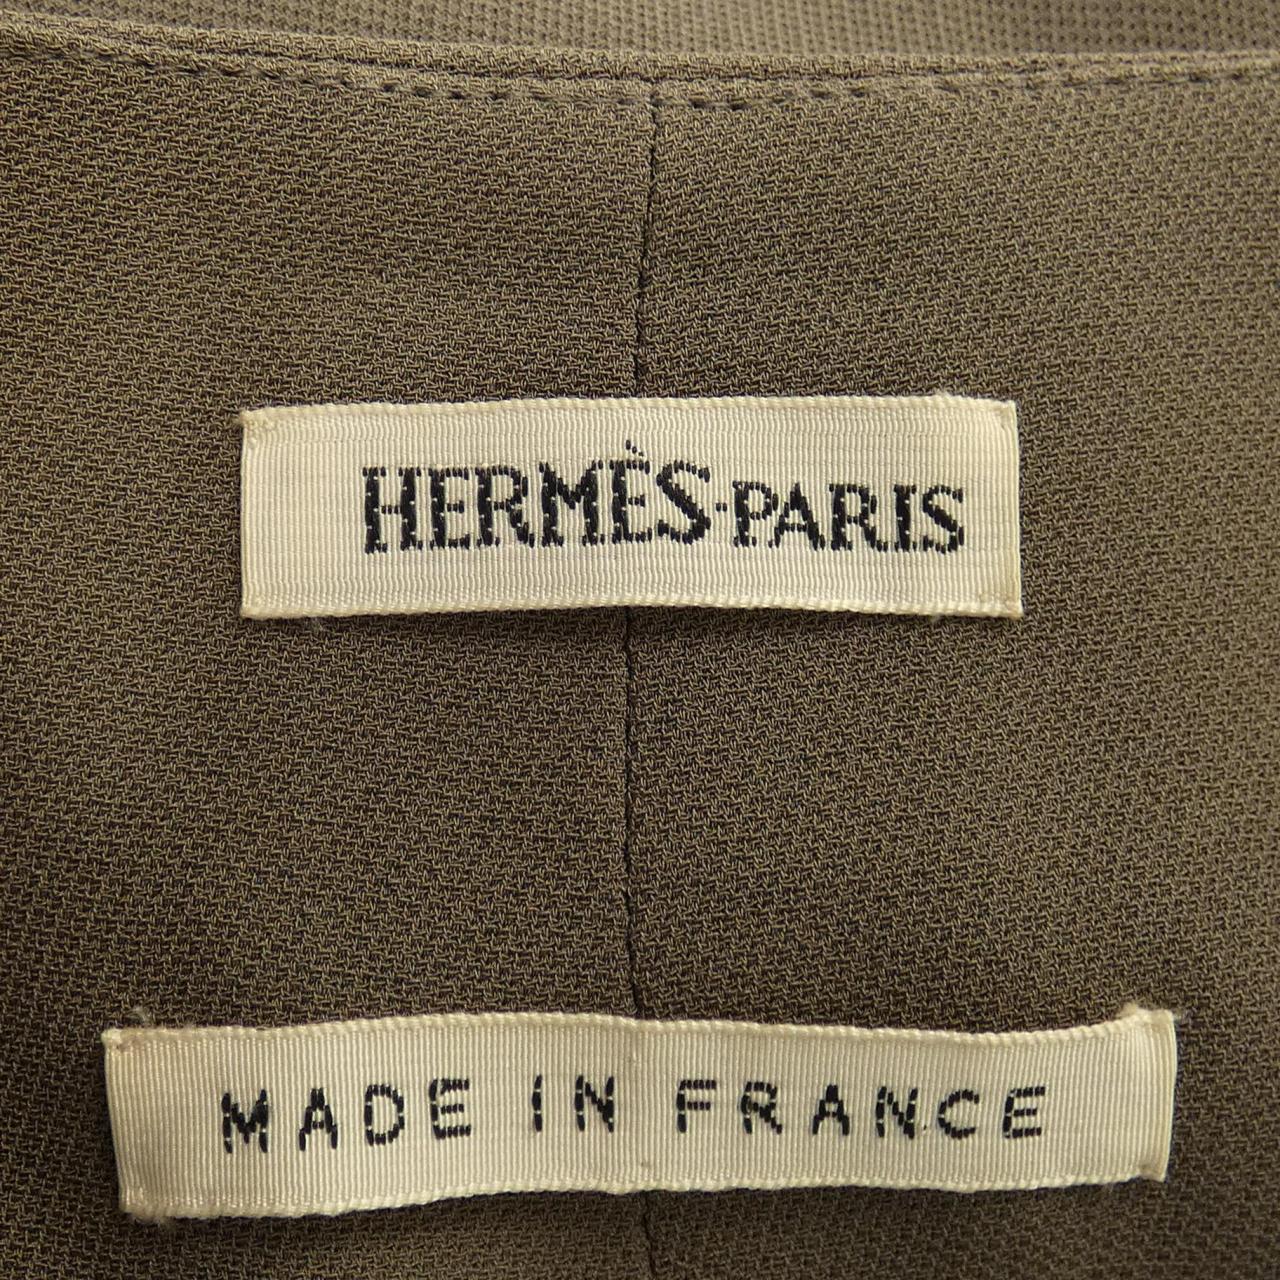 [vintage] HERMES Skirt